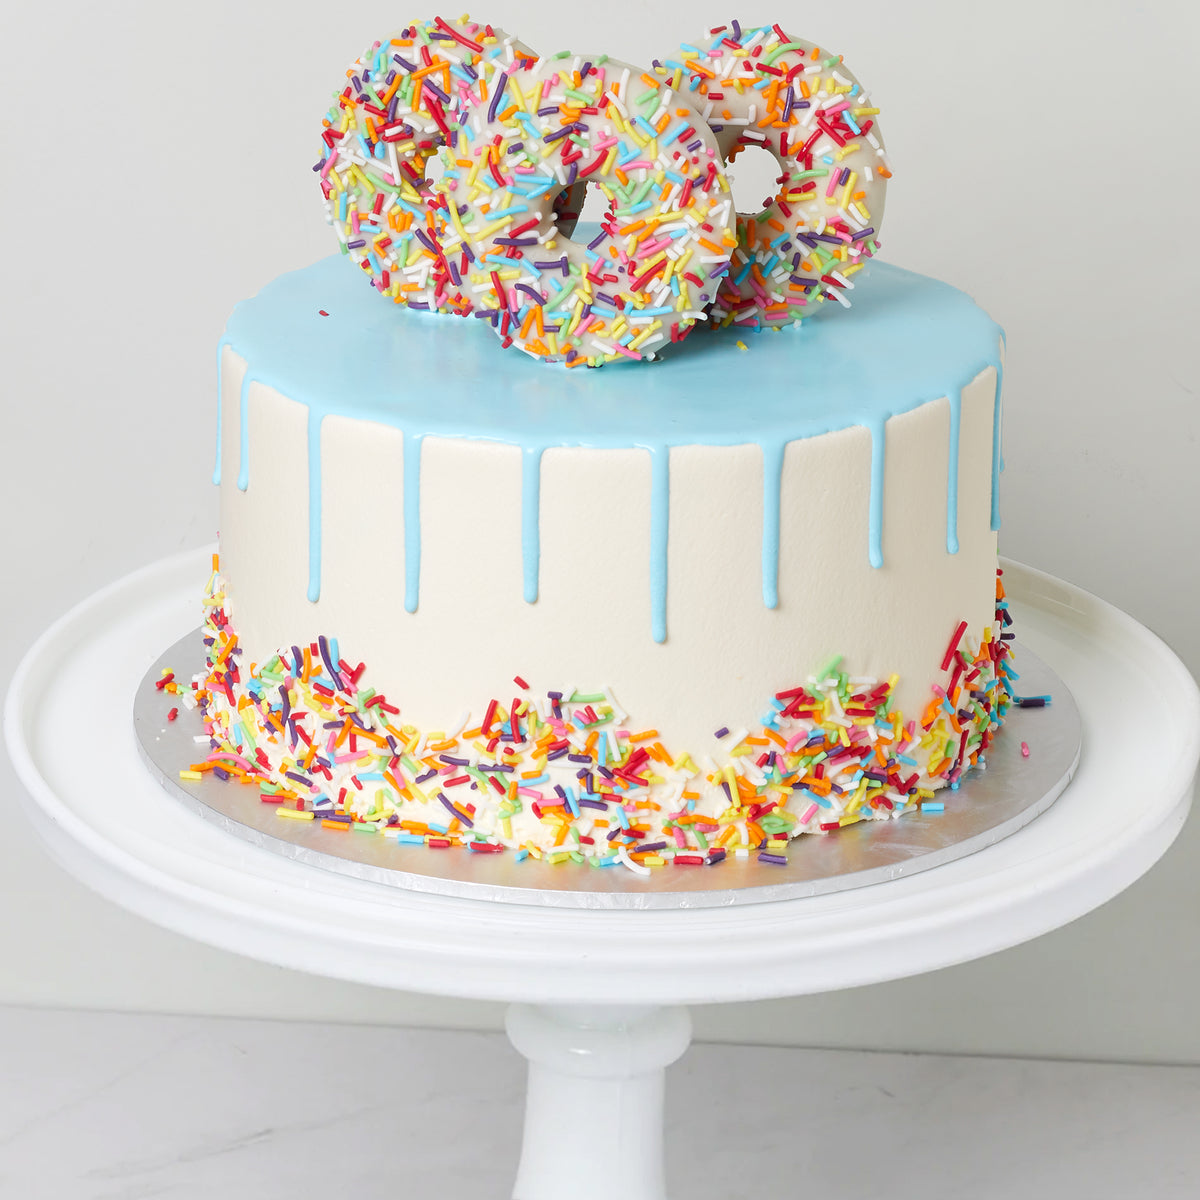 DOUGHNUT BIRTHDAY CAKE | THE CRVAERY CAKES